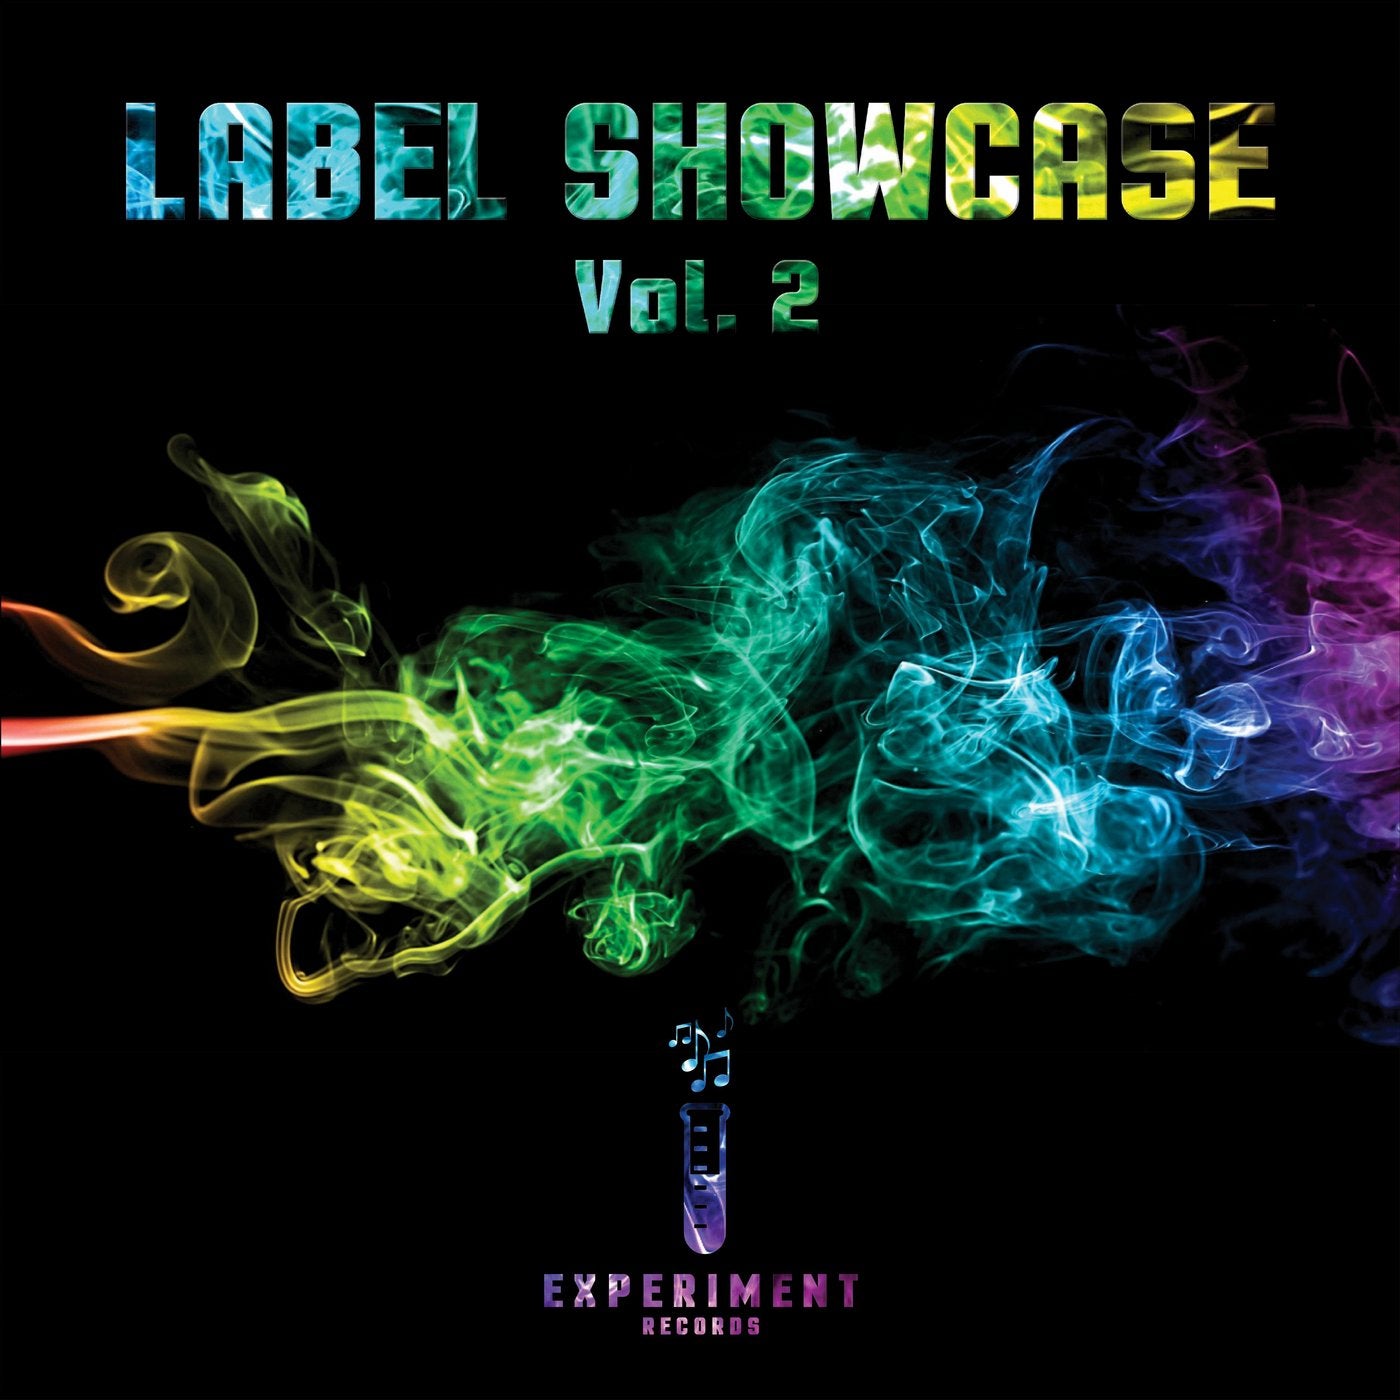 Label Showcase Vol.2